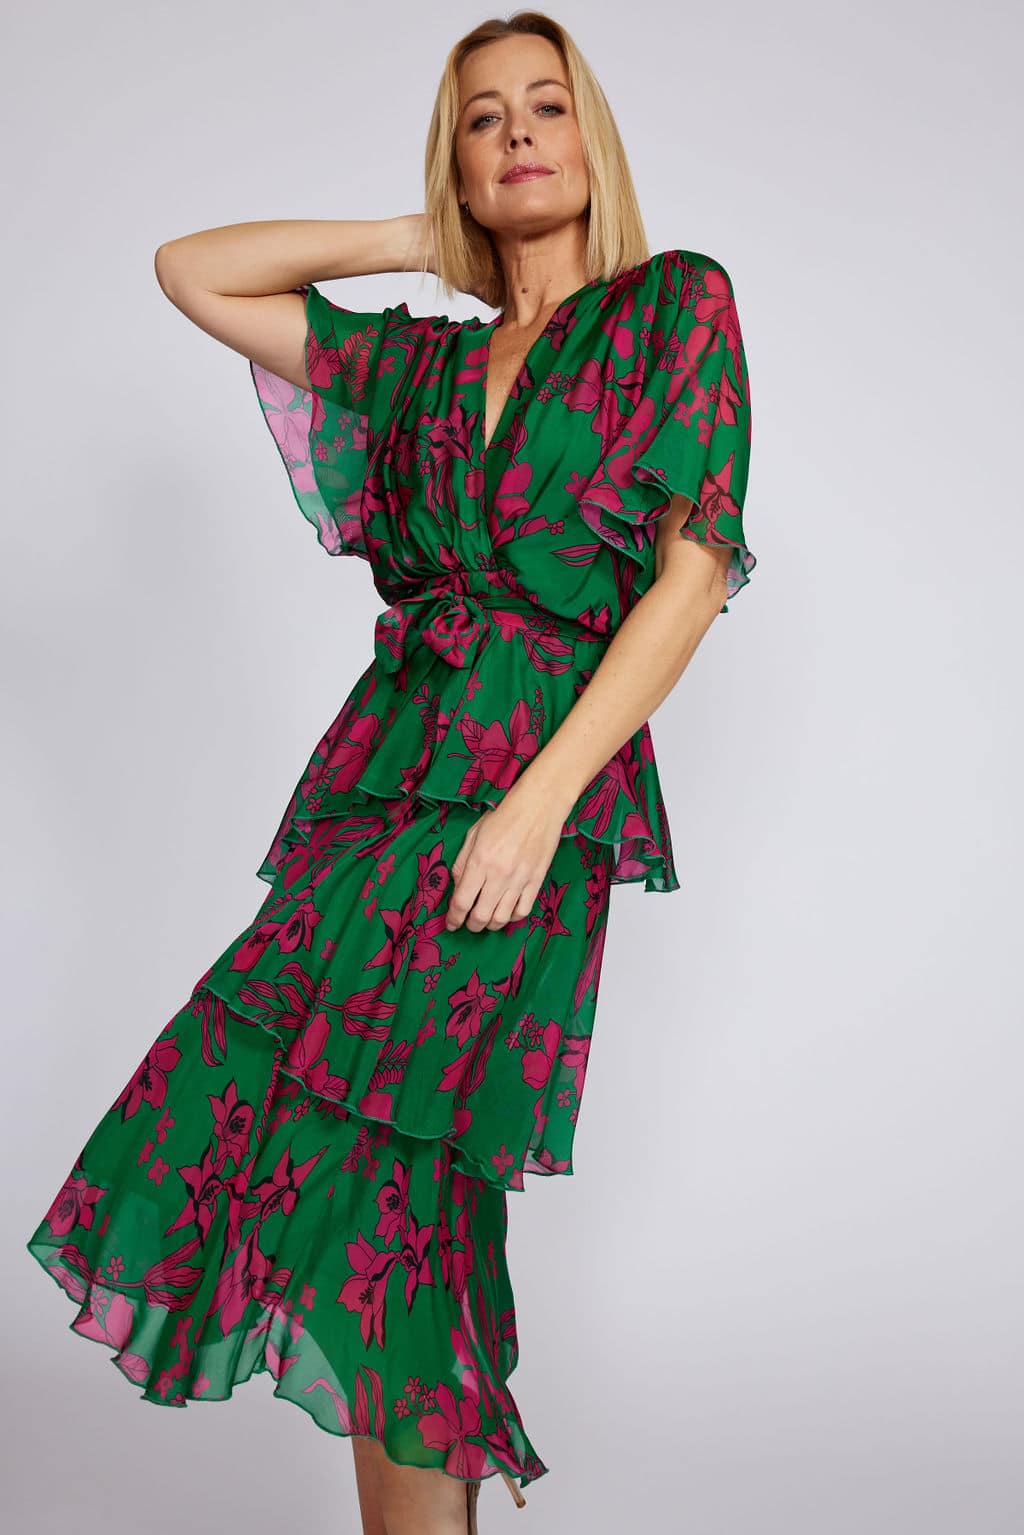 Tier Dress crossover neckline - Green/Pink Floral (Size XL)